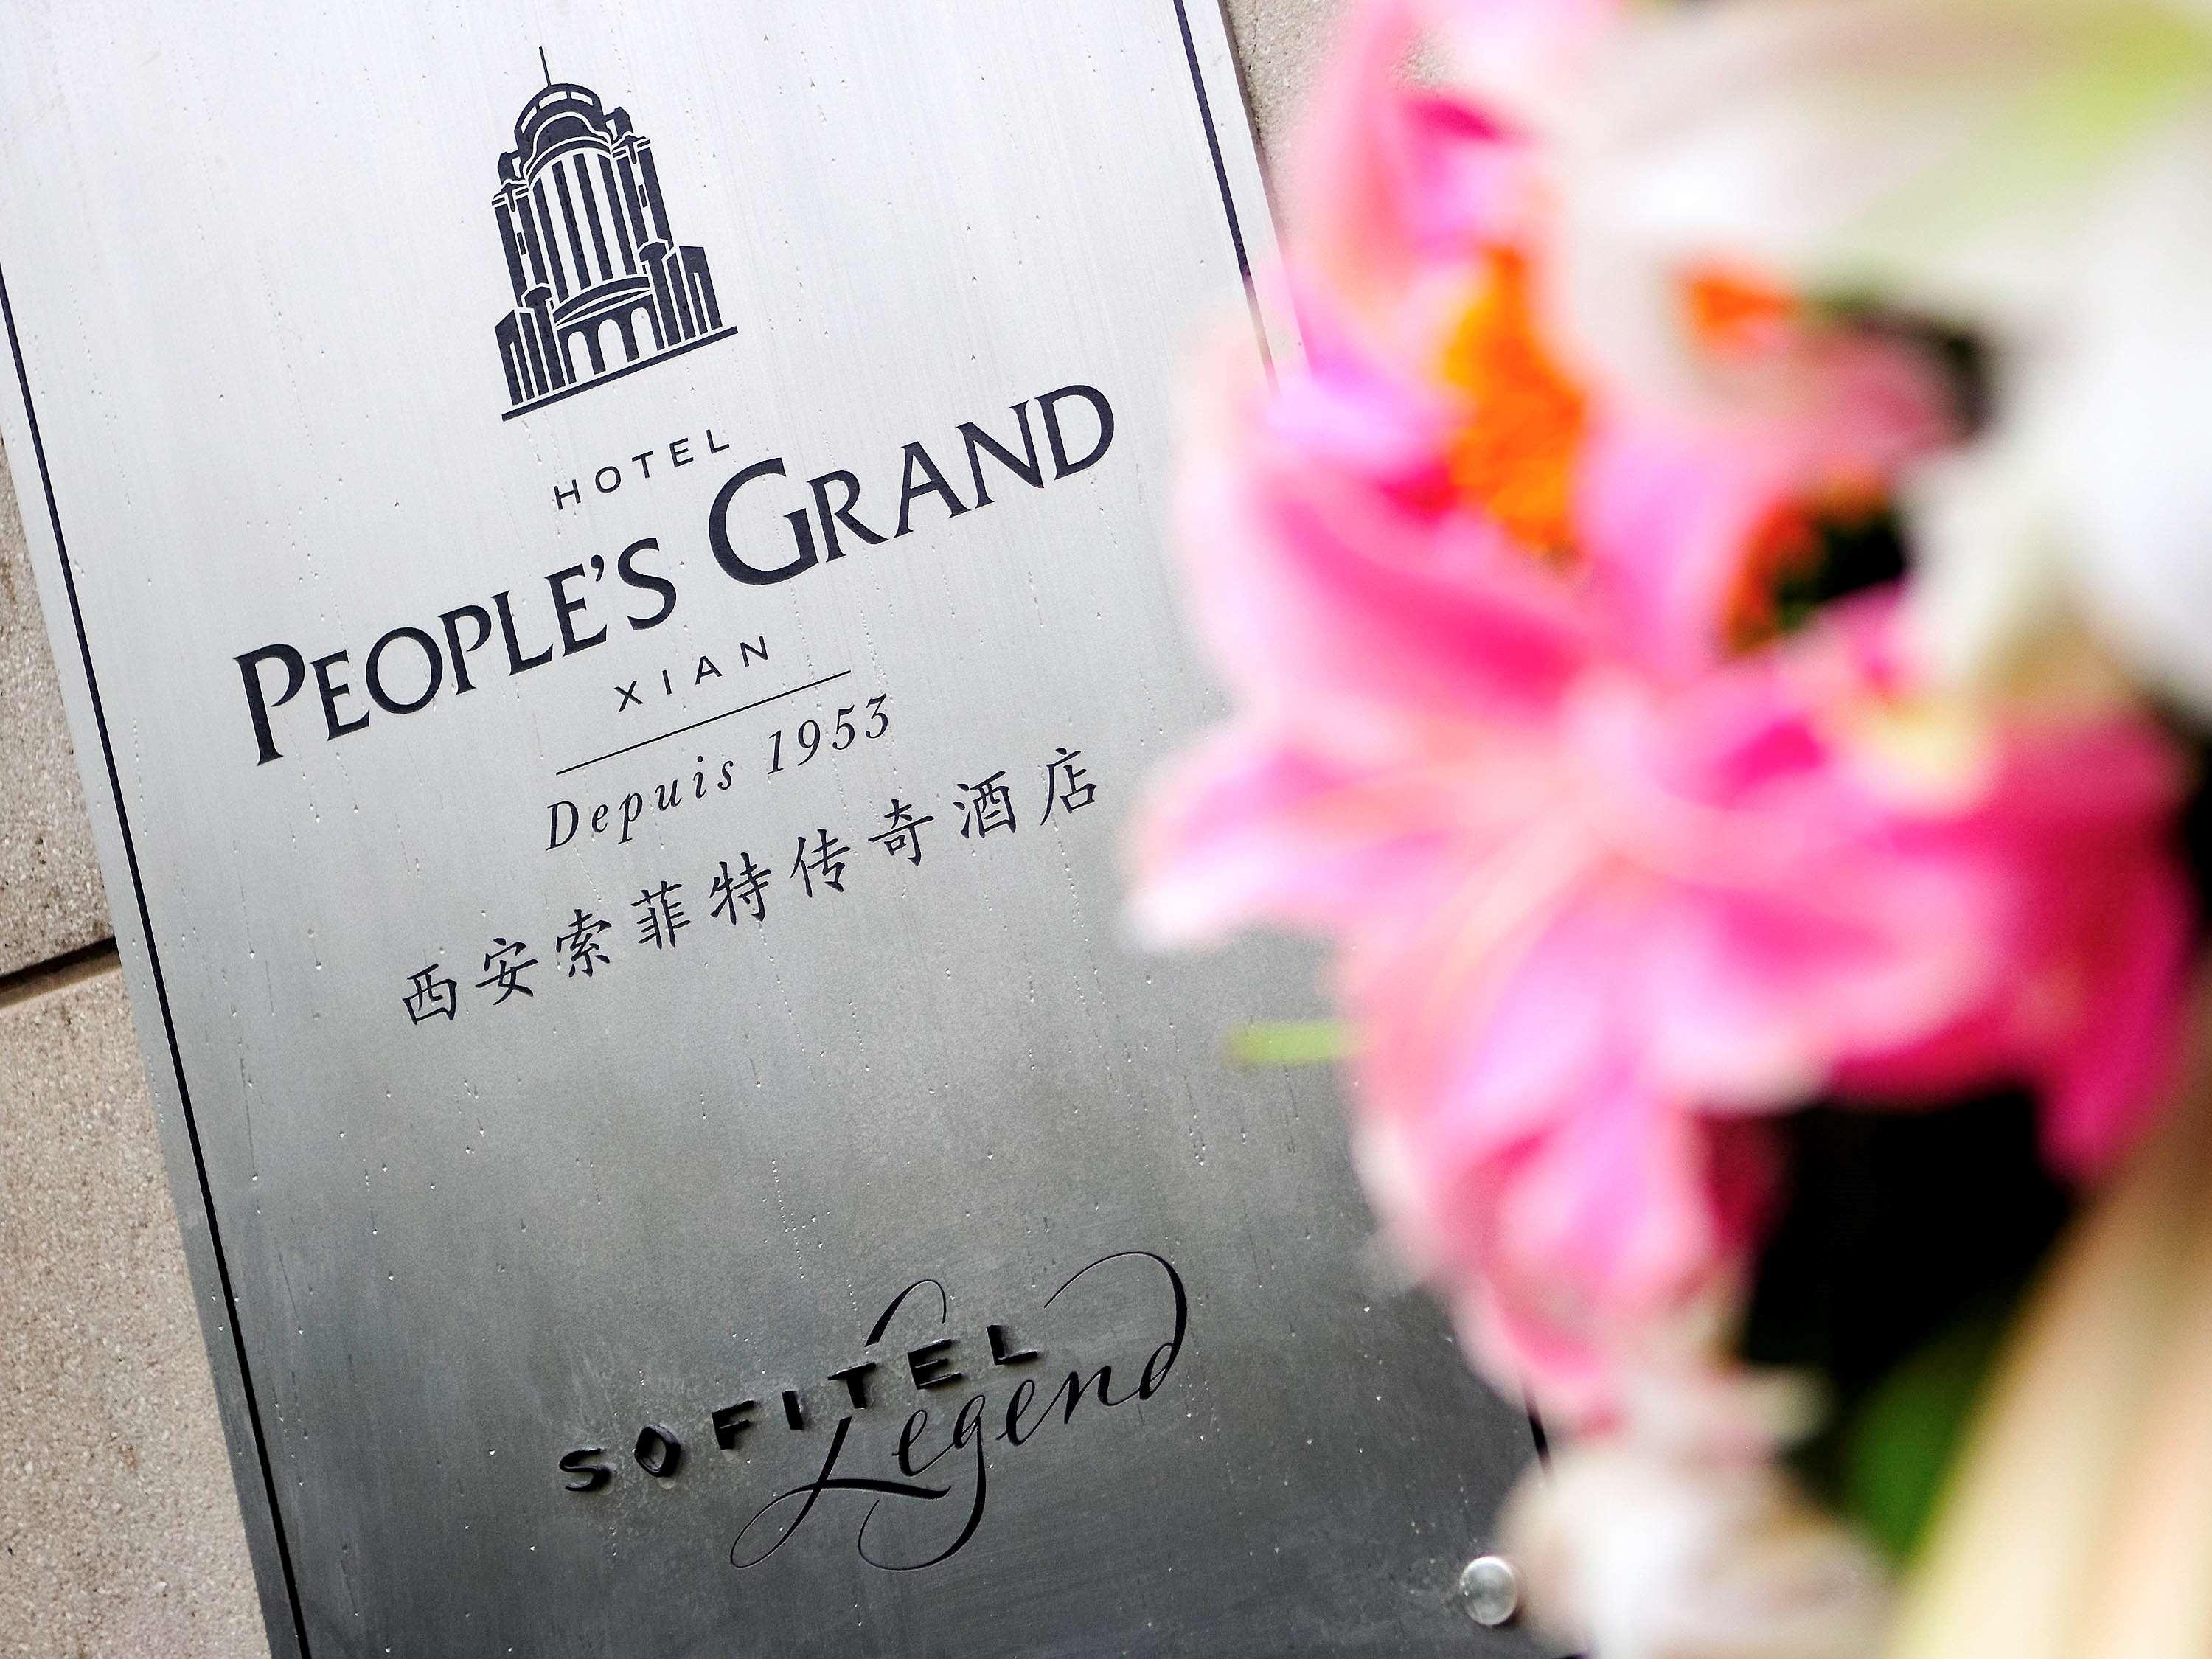 Sofitel Legend Peoples Grand Hotel Xian